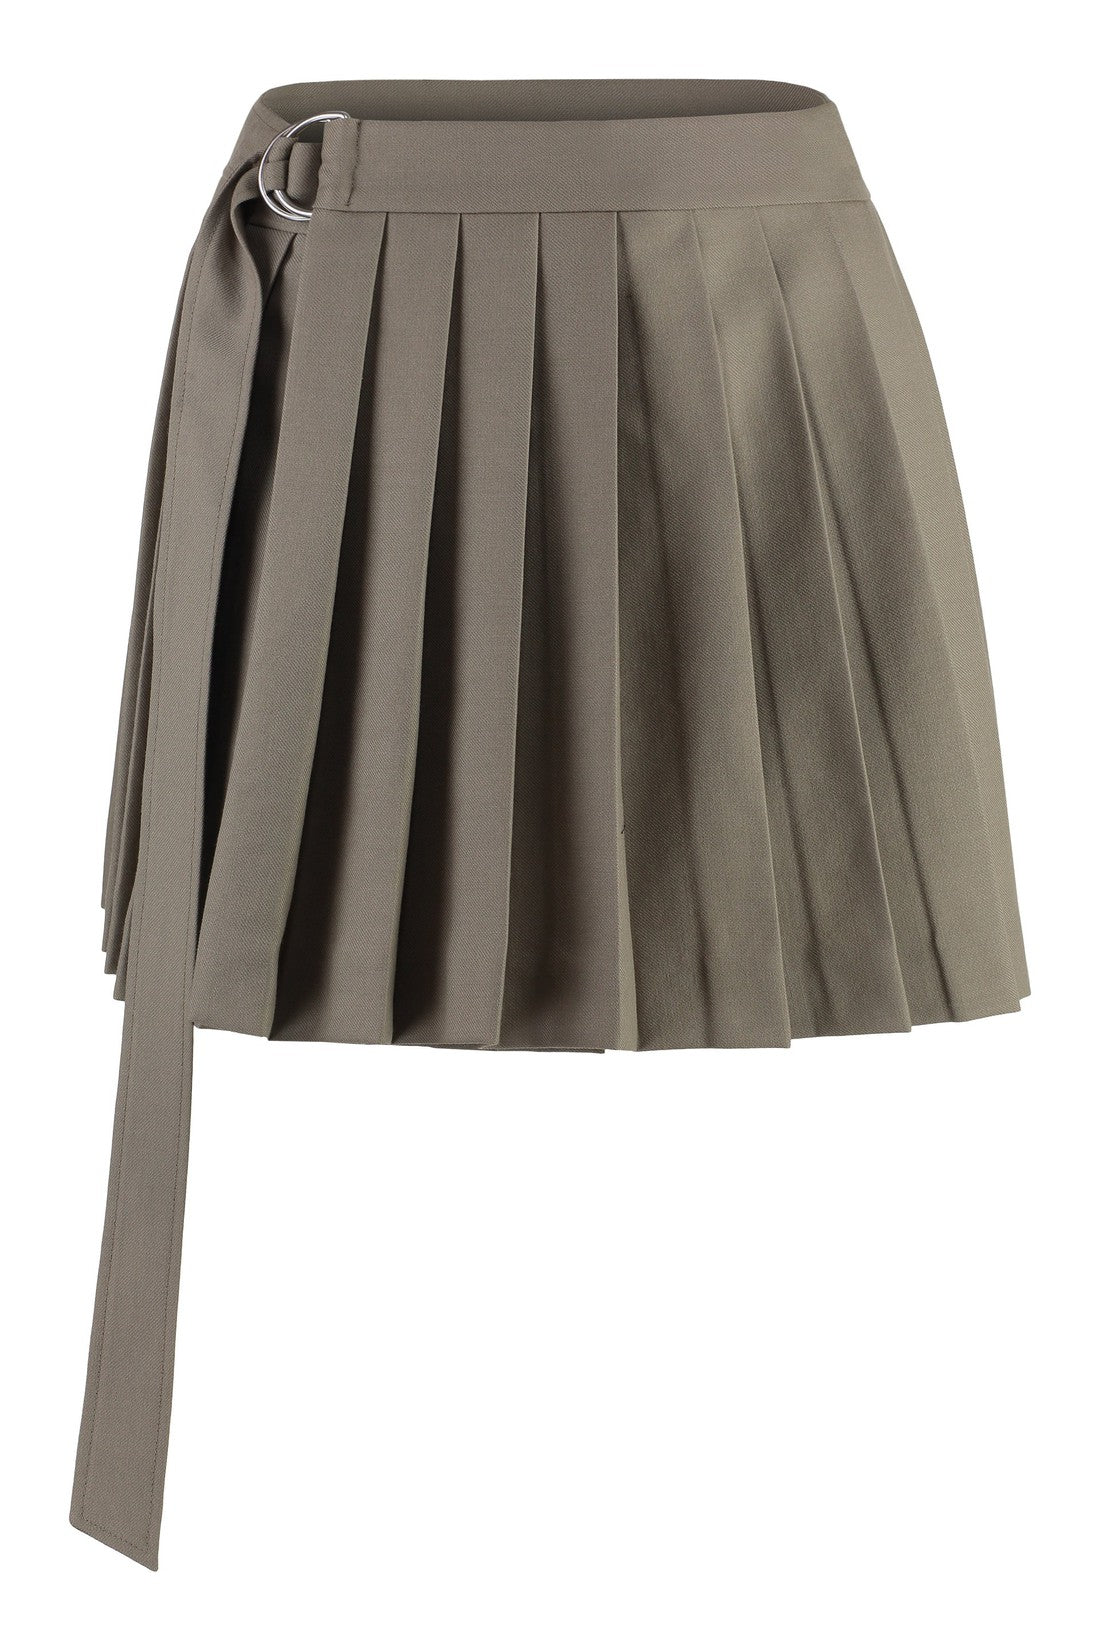 Pleated-skirt-AMI-PARIS-designer-outlet-archivist_9731caa1-dcf2-4dff-a1c6-0b25d1833dbb.jpg